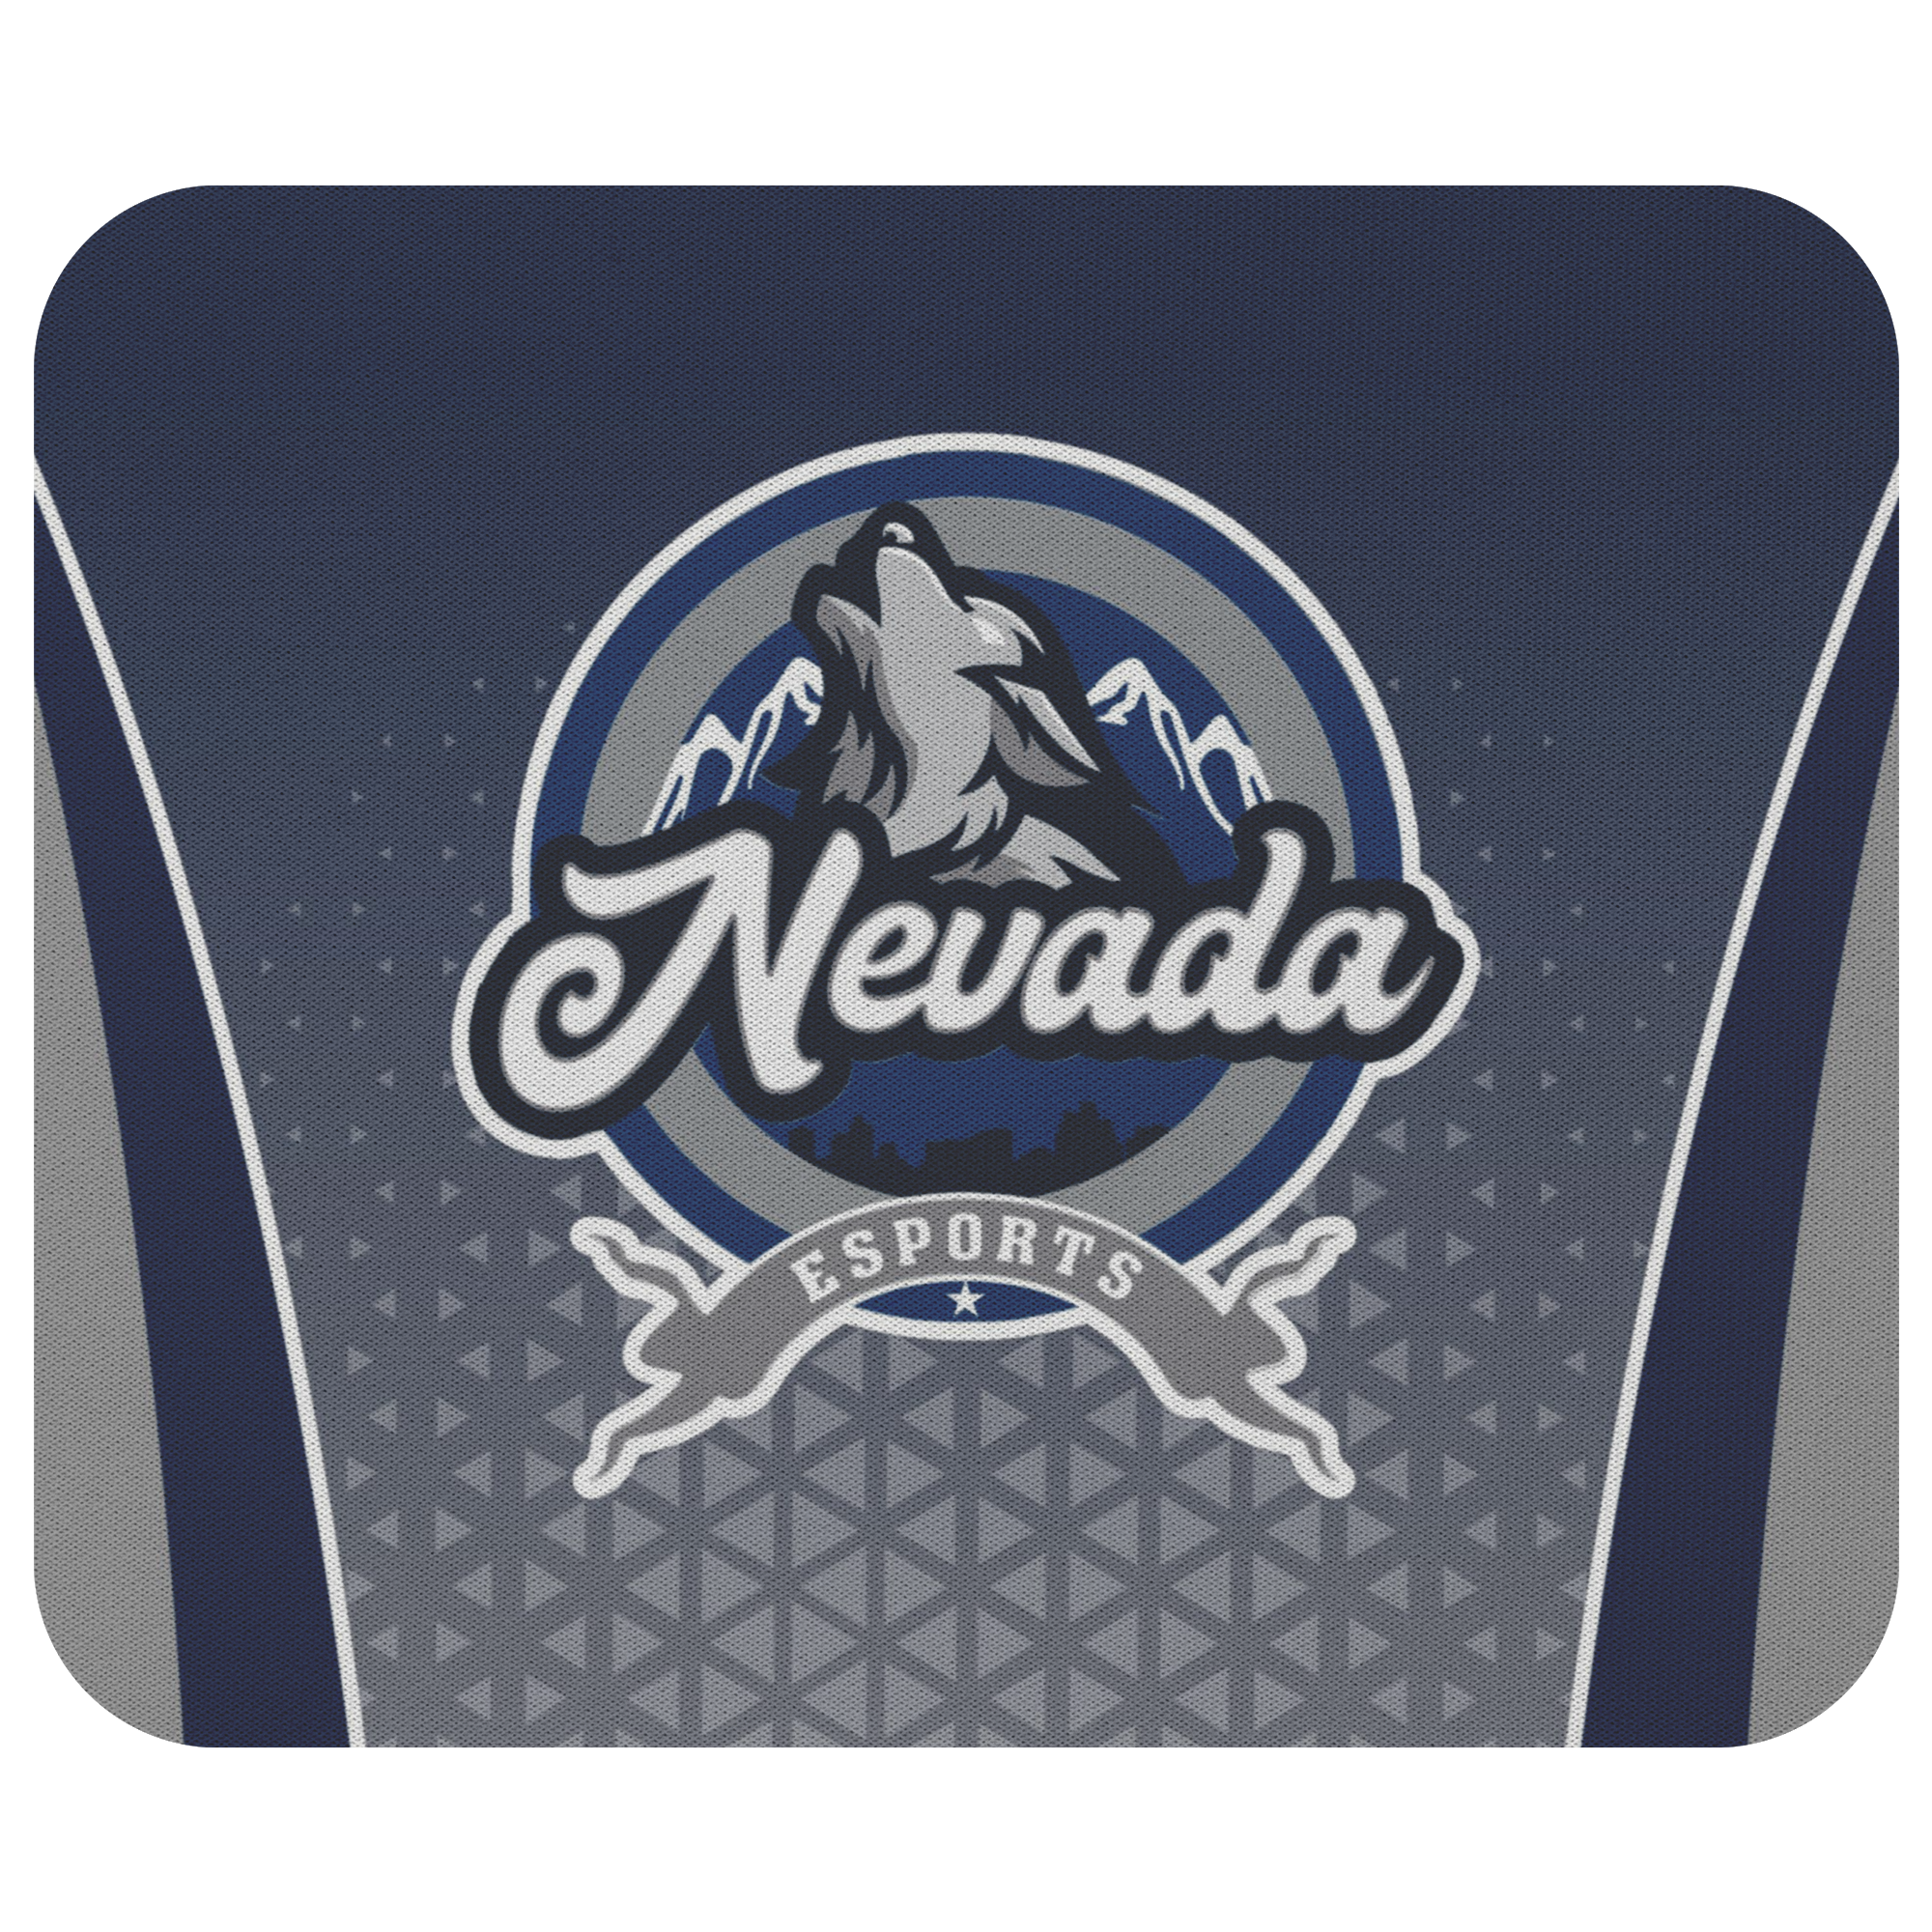 Nevada Esports | Street Gear | Mouse Pad